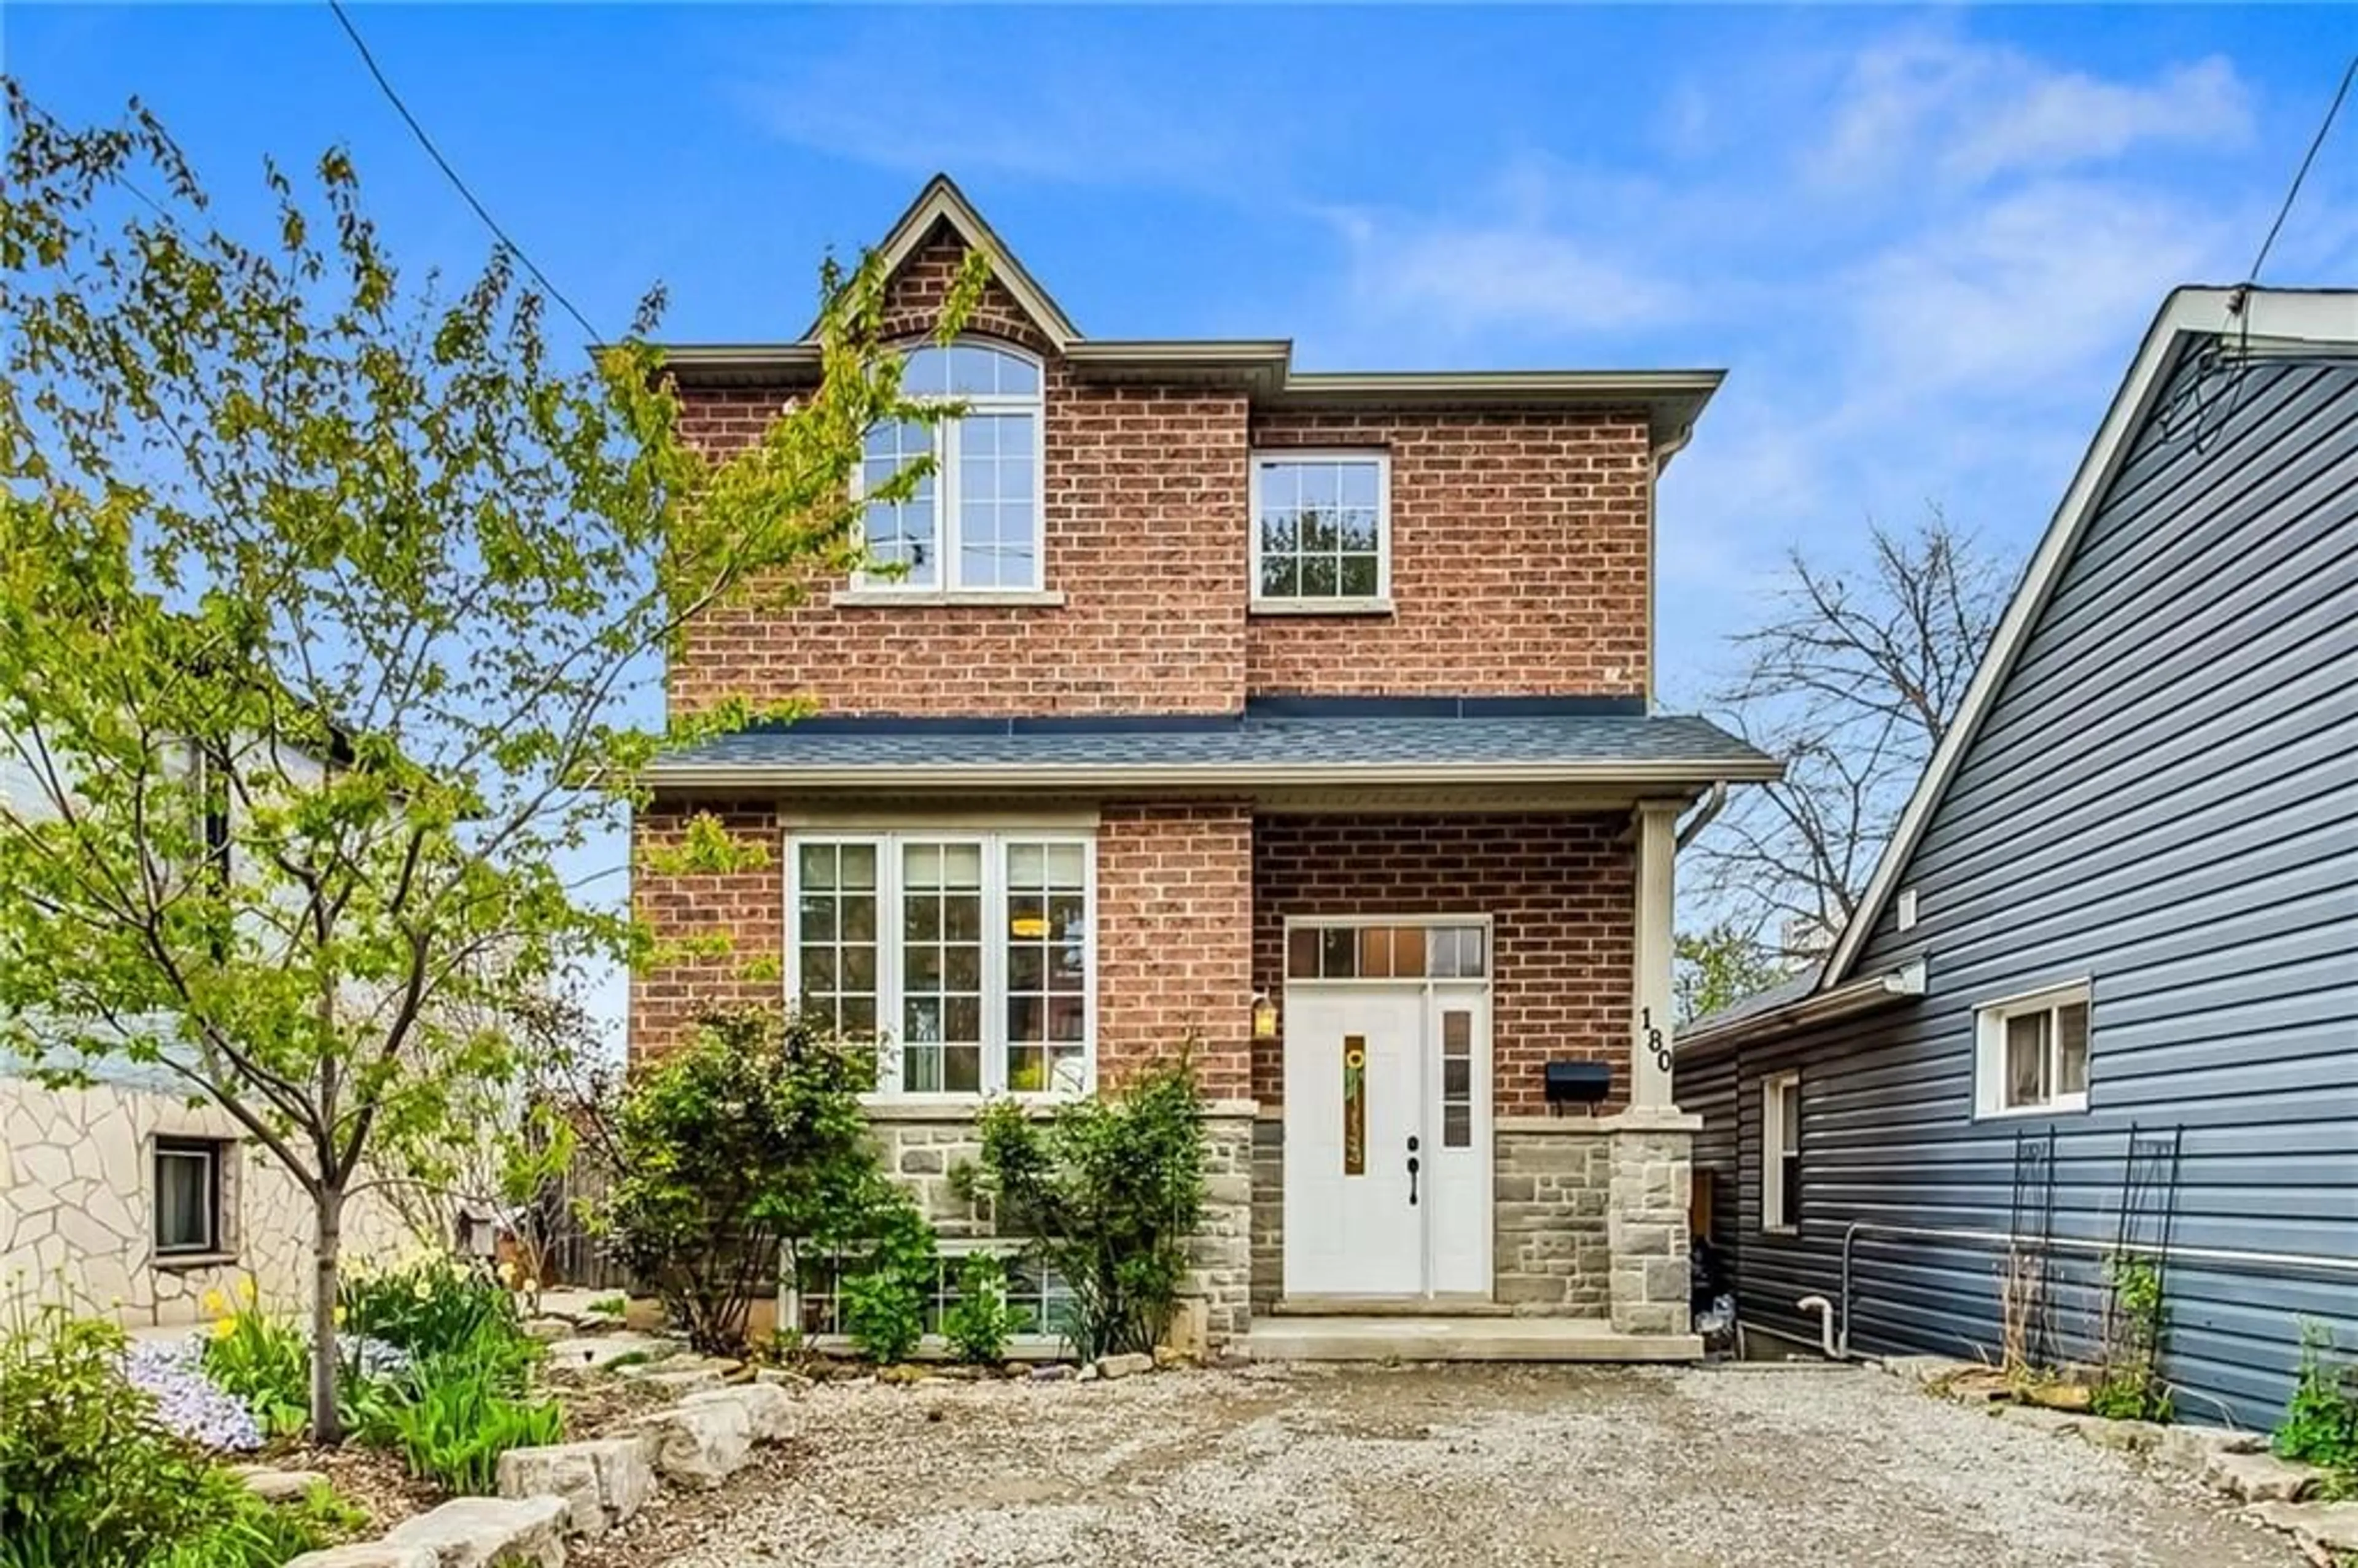 Home with brick exterior material for 180 Napier St, Hamilton Ontario L8R 1S5